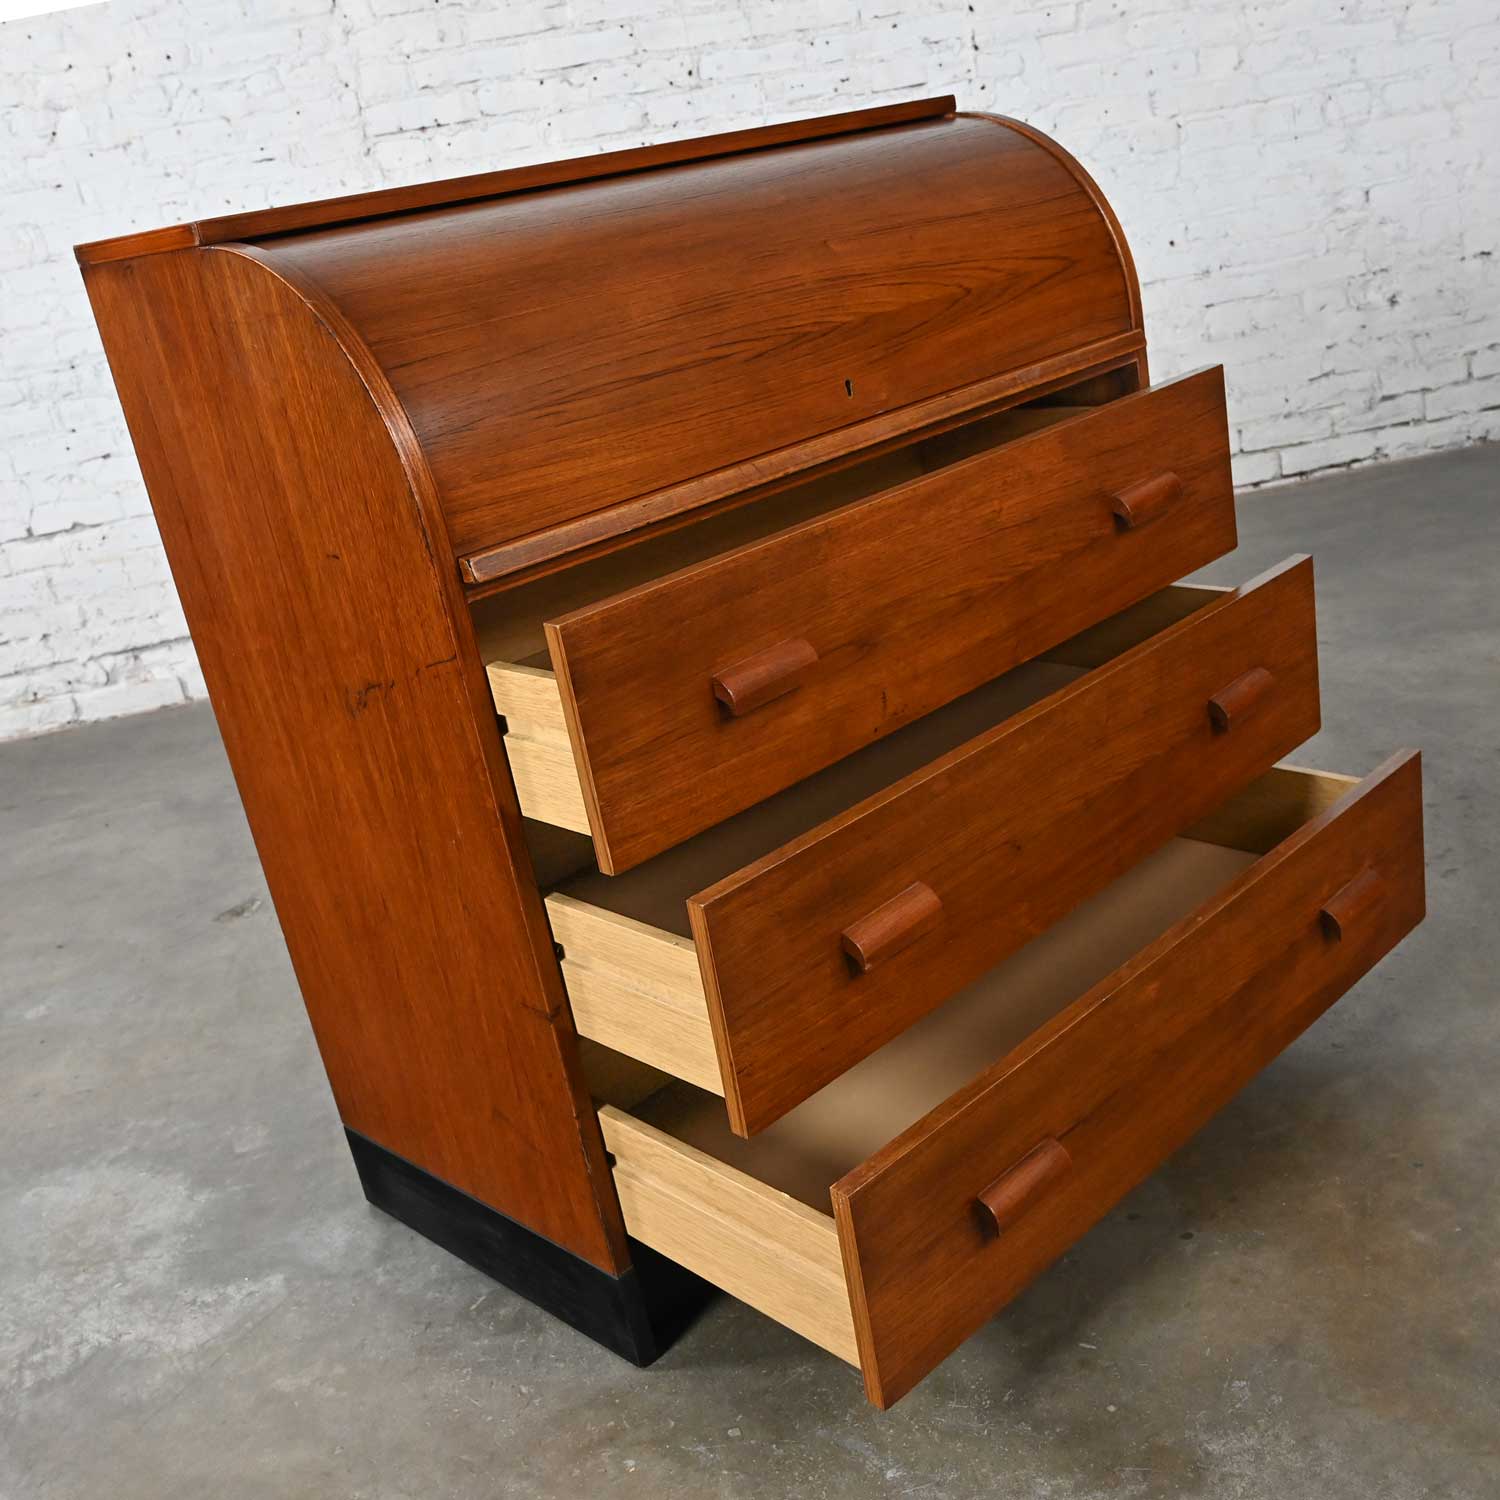 Mid-20th Century Scandinavian Modern Teak Roll Top Desk or Dresser